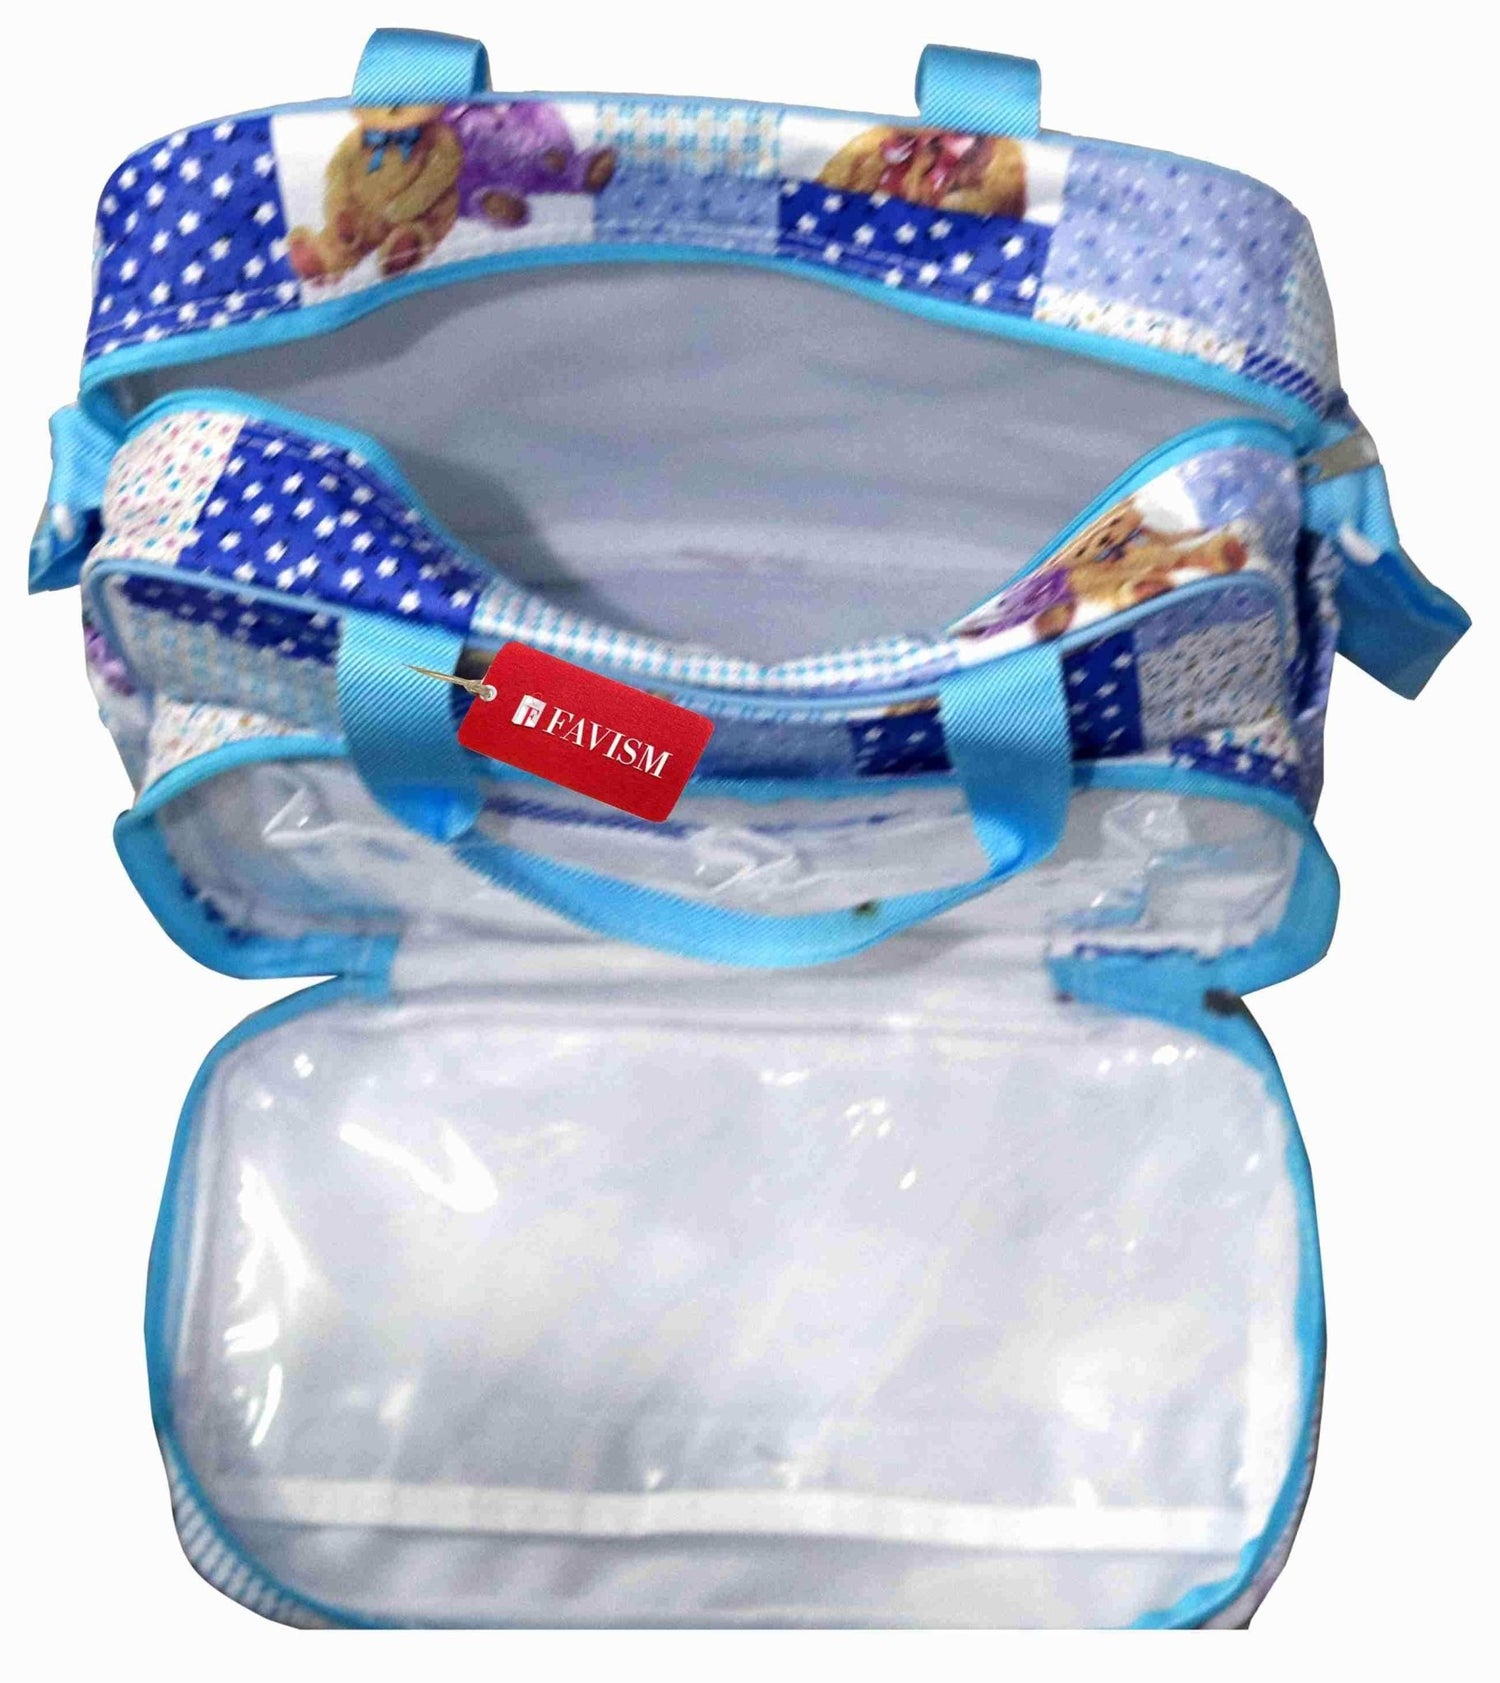 baby diaper bag for mother | baby accessories bag | multipurpose bag - FAVISM